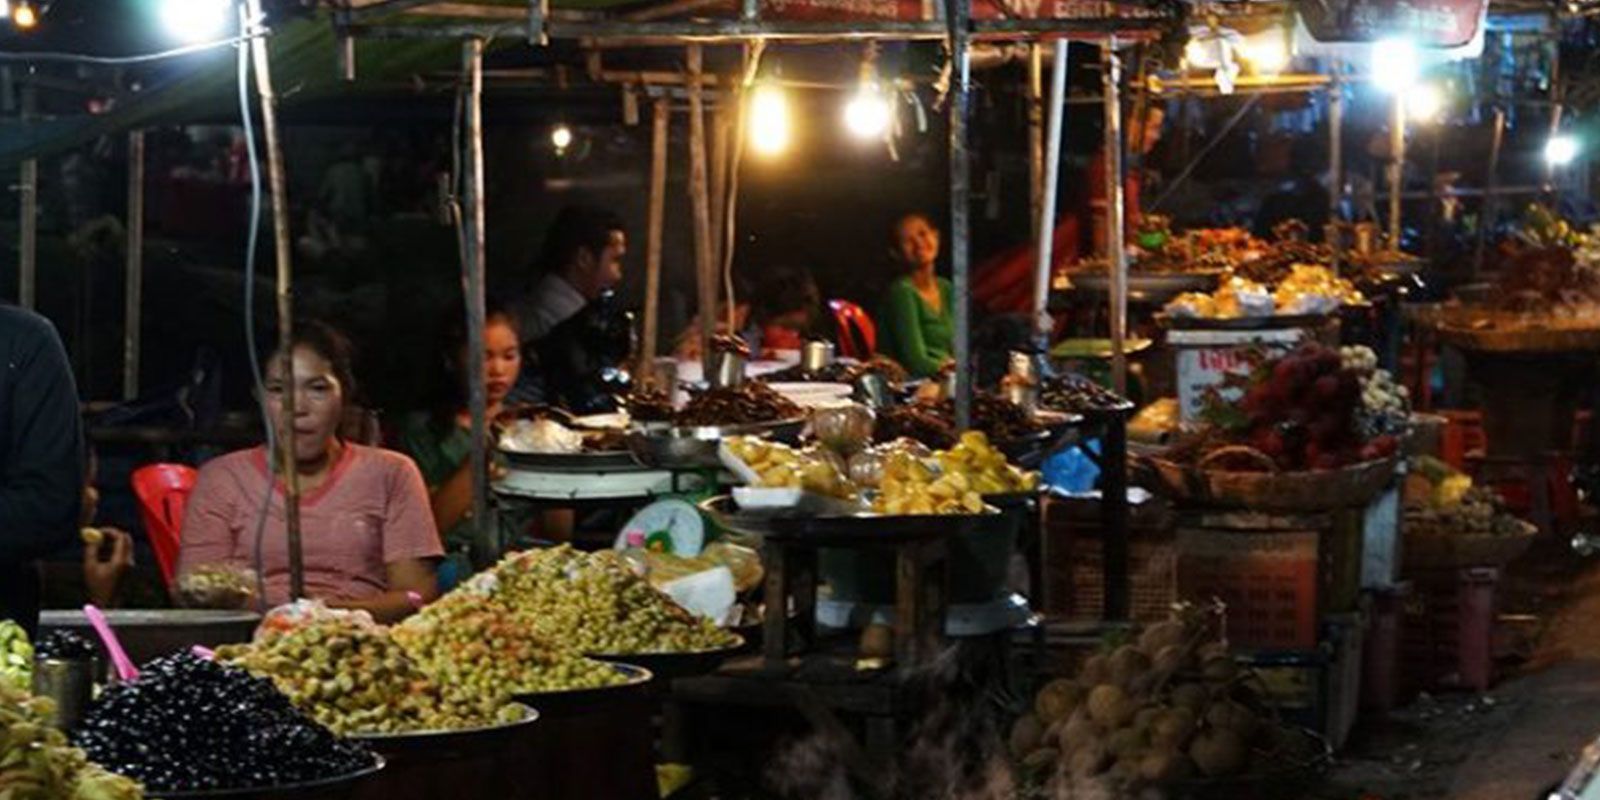 Siem-Reap-Local-Night-Market-1001.jpg